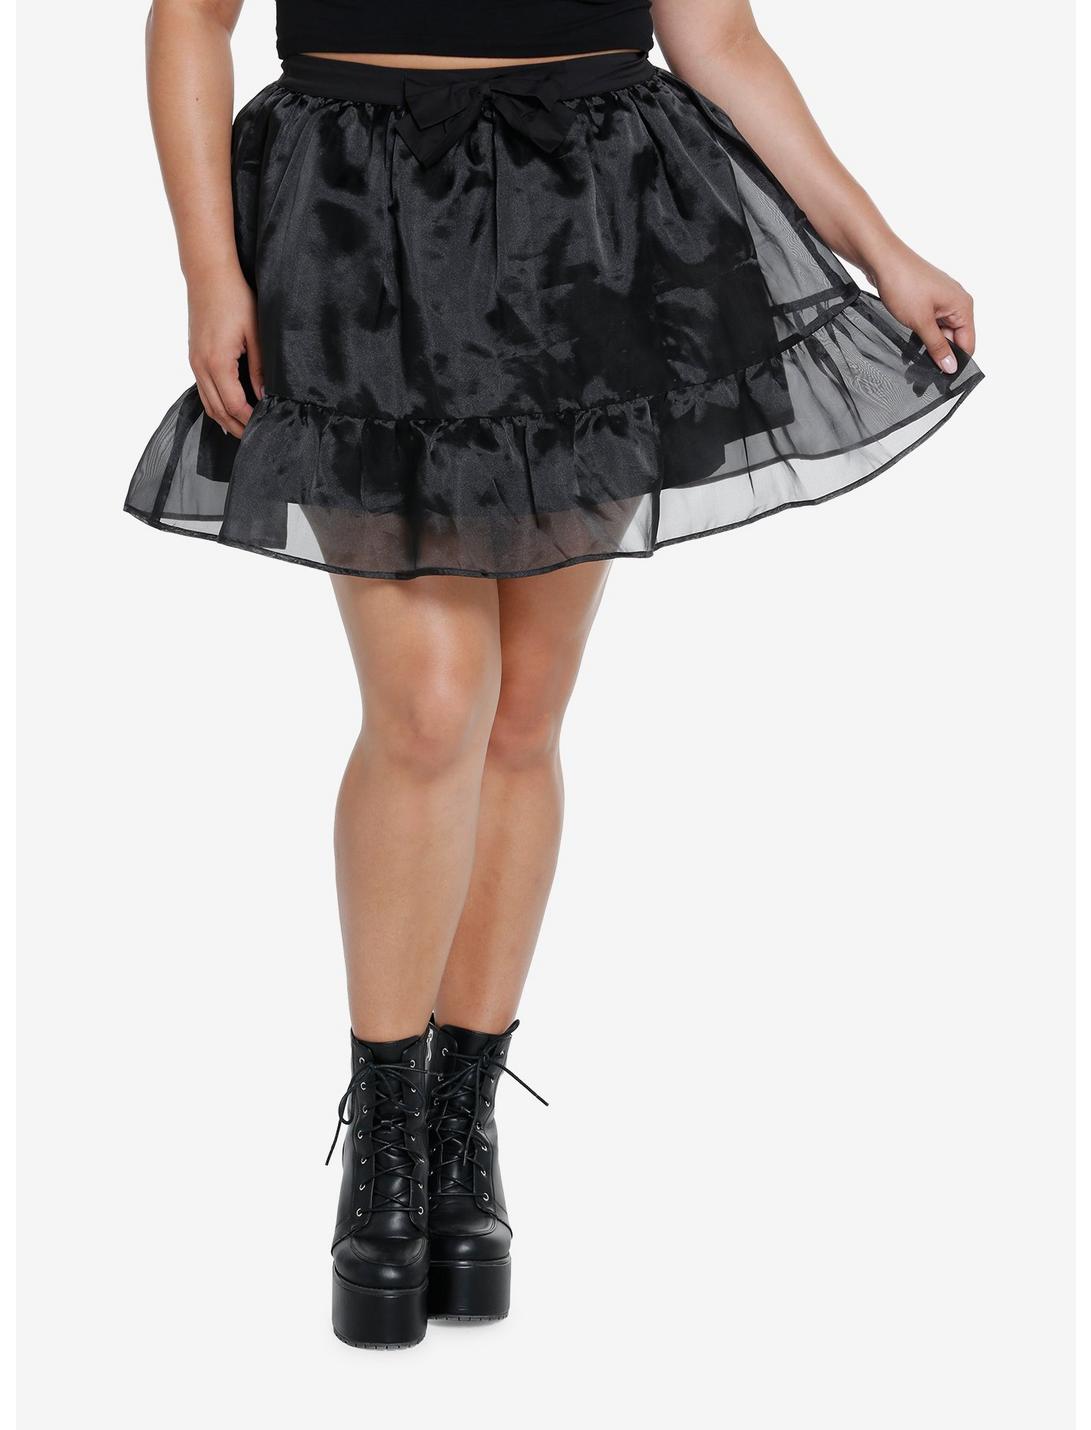 Cosmic Aura Black Organza Bow Mini Skirt Plus Size, BLACK, hi-res